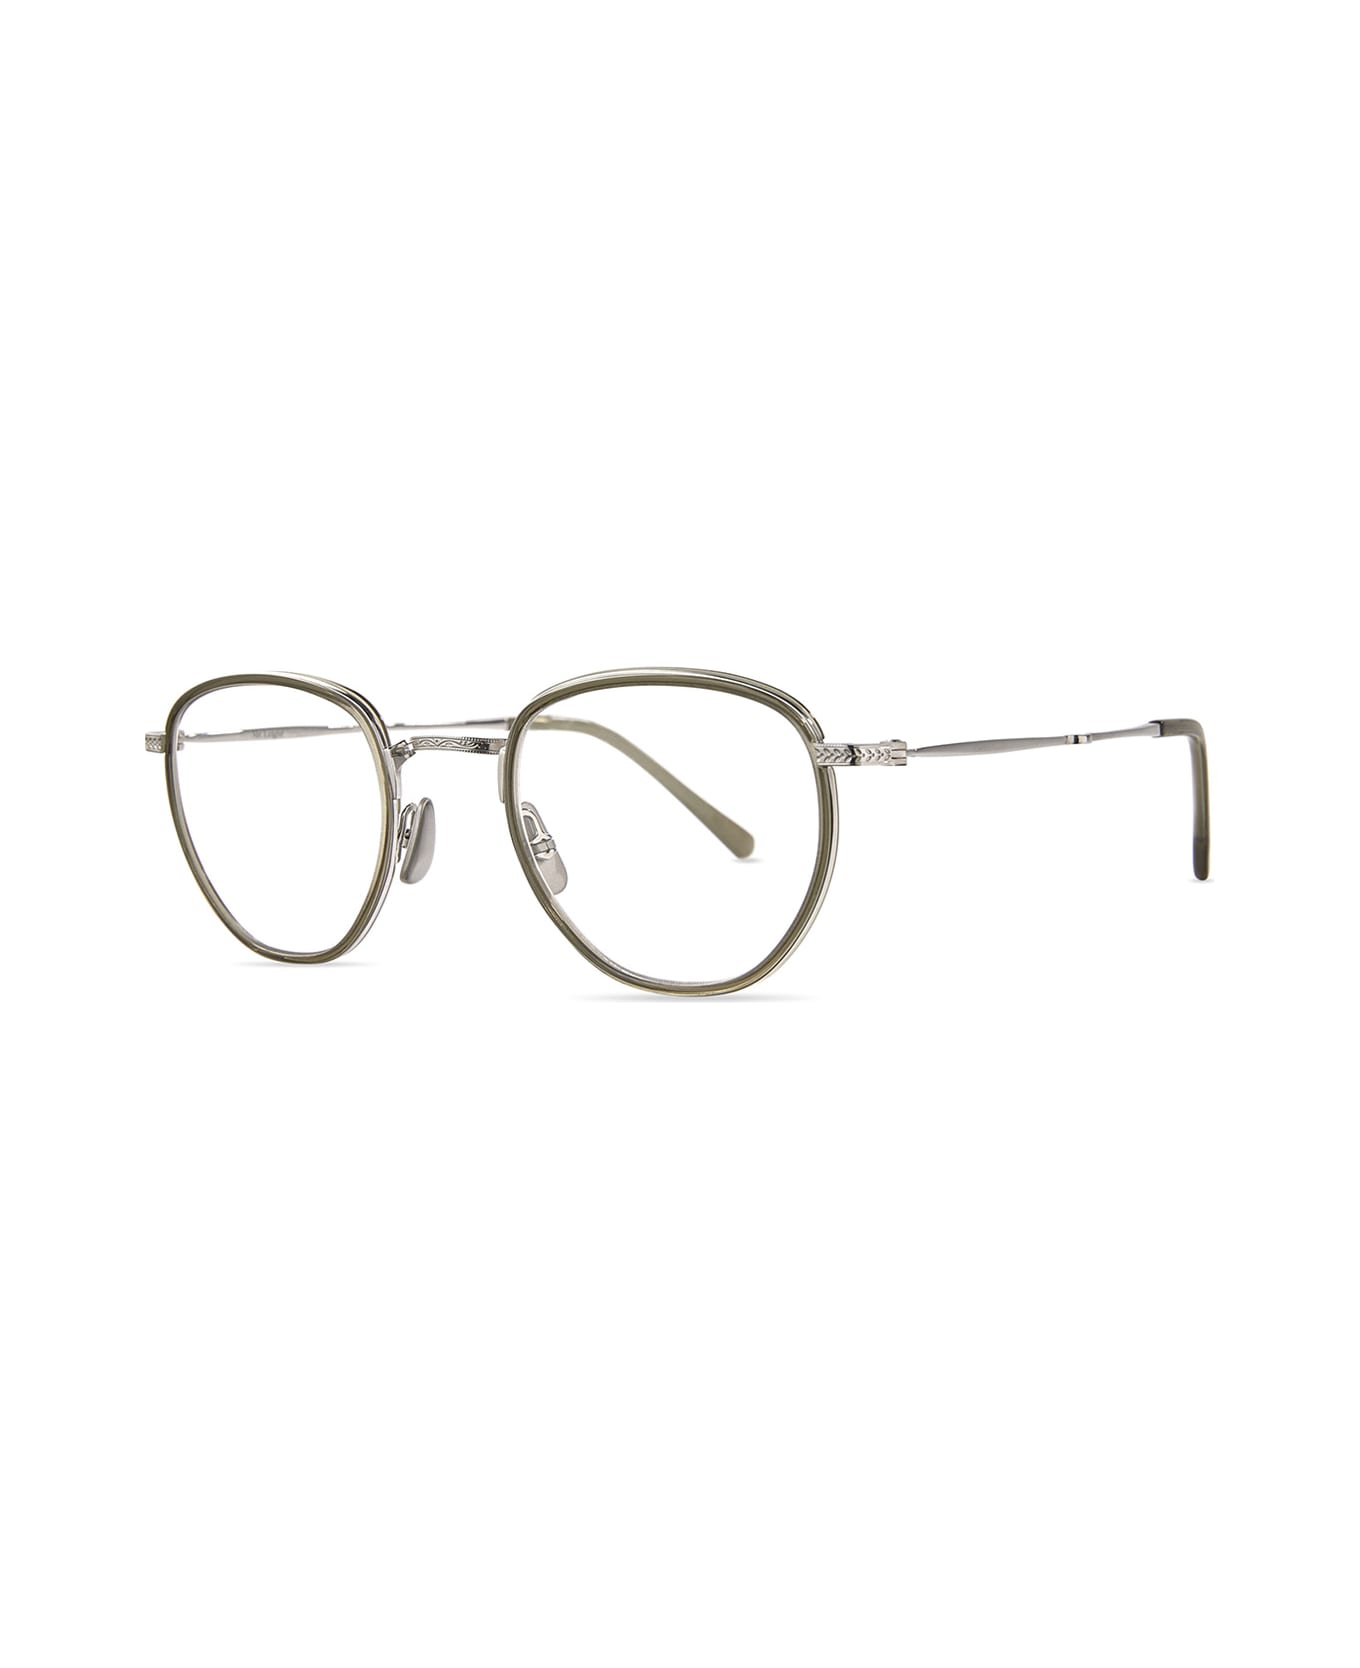 Mr. Leight Roku C Limu-platinum Glasses - Limu-Platinum